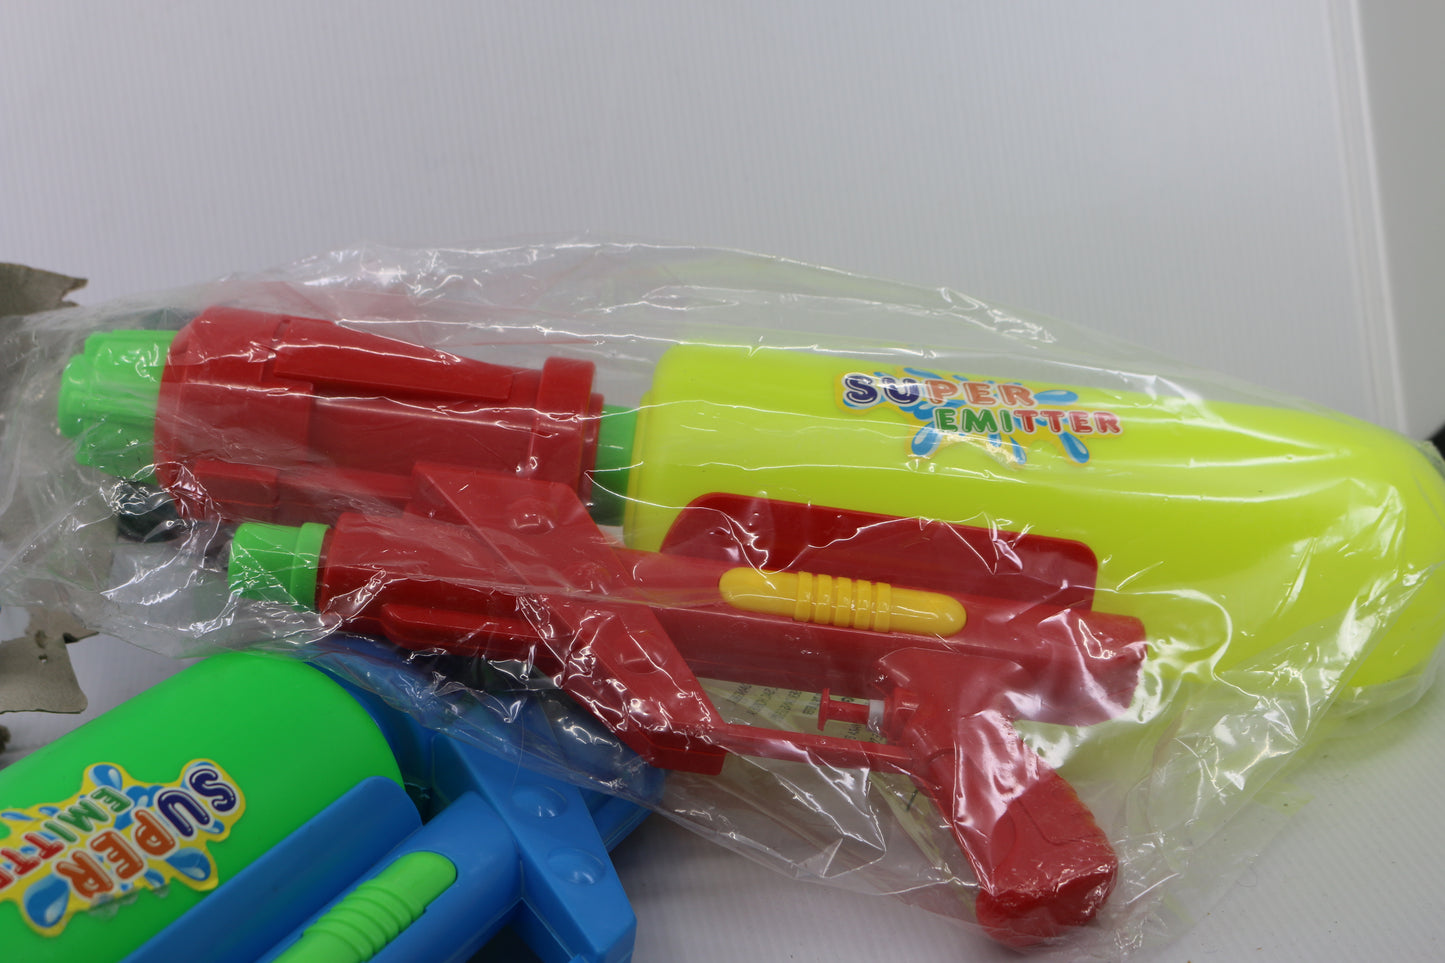 Lot of 2 super emitter water gun Summer pool party plastic pistol